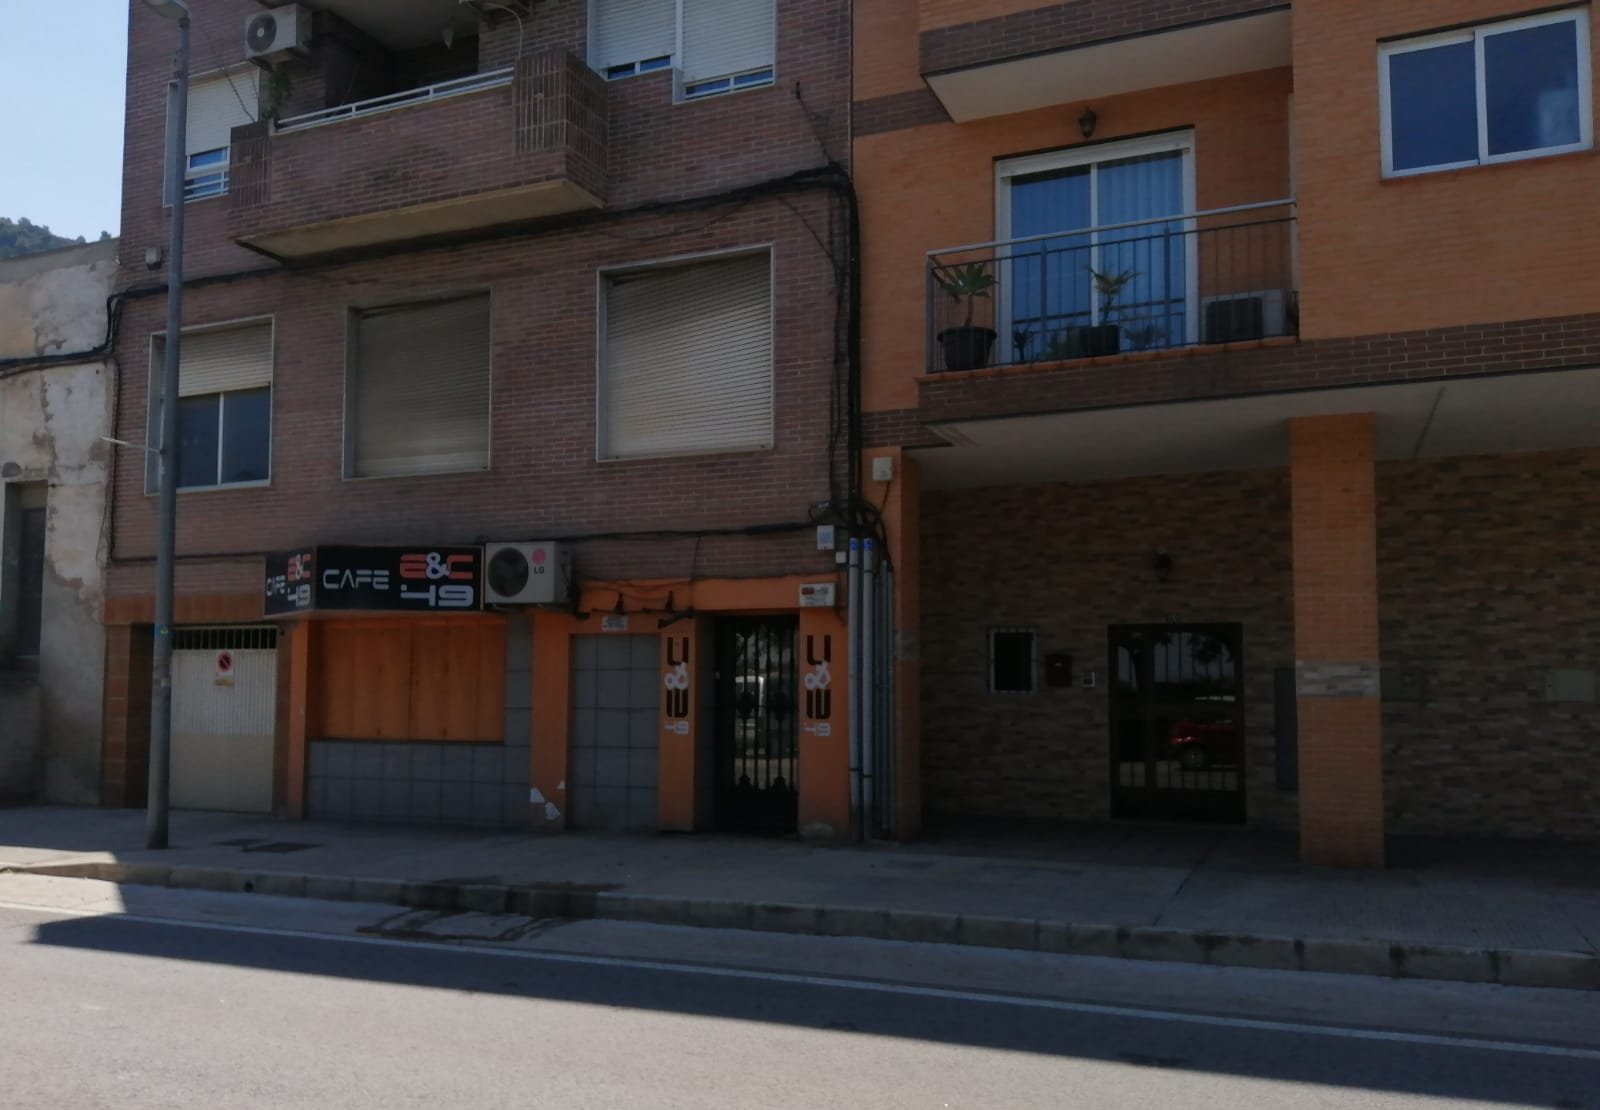 Compra local comercial por 39500 con 54m en condiciones de restauracin en calle pintor velazquez Murcia